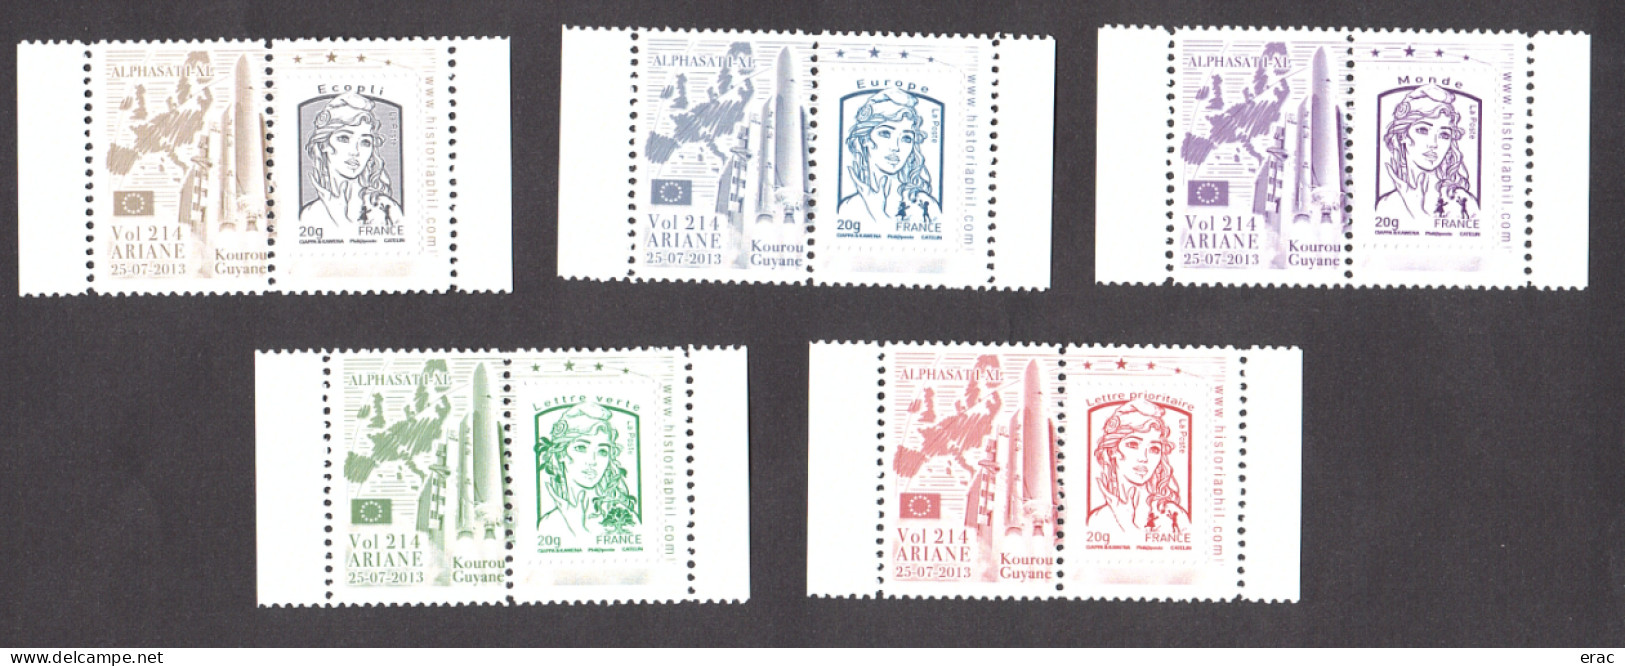 5 Porte-timbres Gommés - 2013 Ariane Vol 214 - Alphasati-XL - Avec TVP Marianne De Ciappa & Kawena Neufs - 2013-2018 Marianne De Ciappa-Kawena